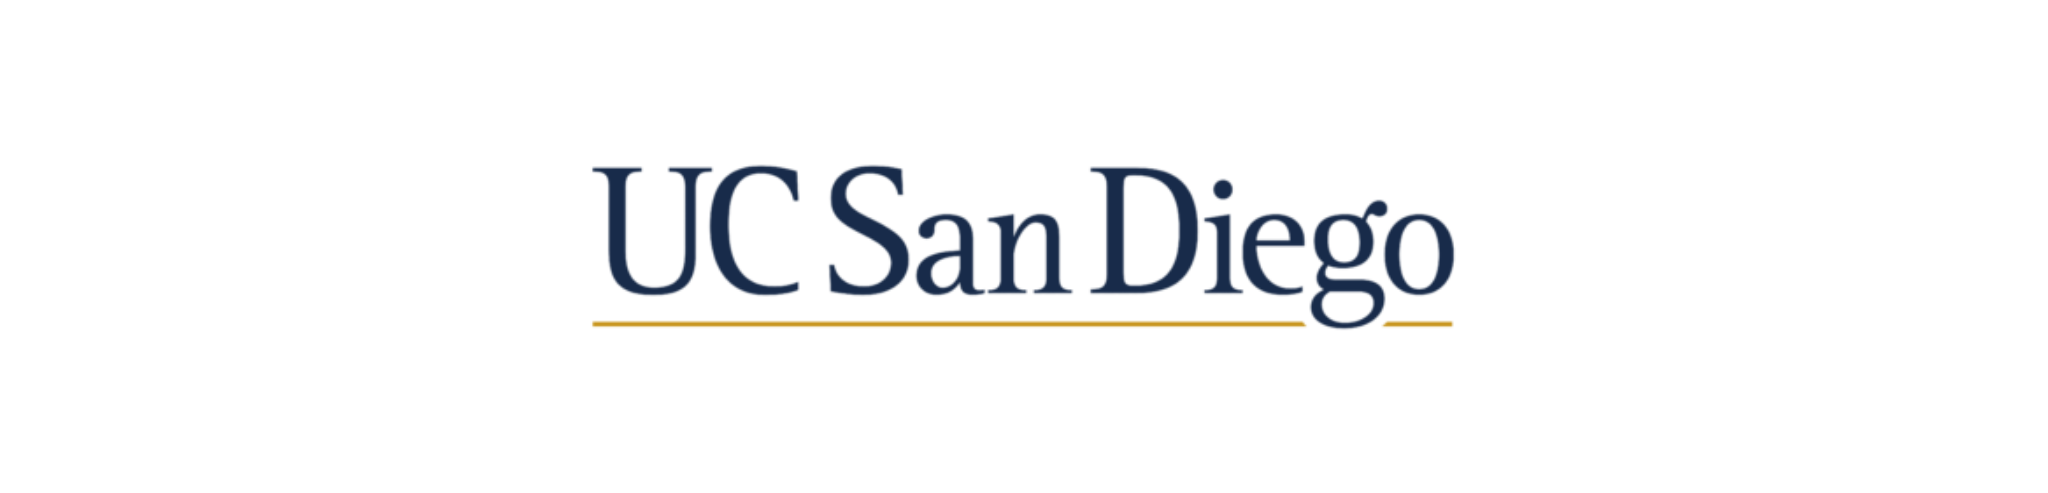 UCSD_Logo